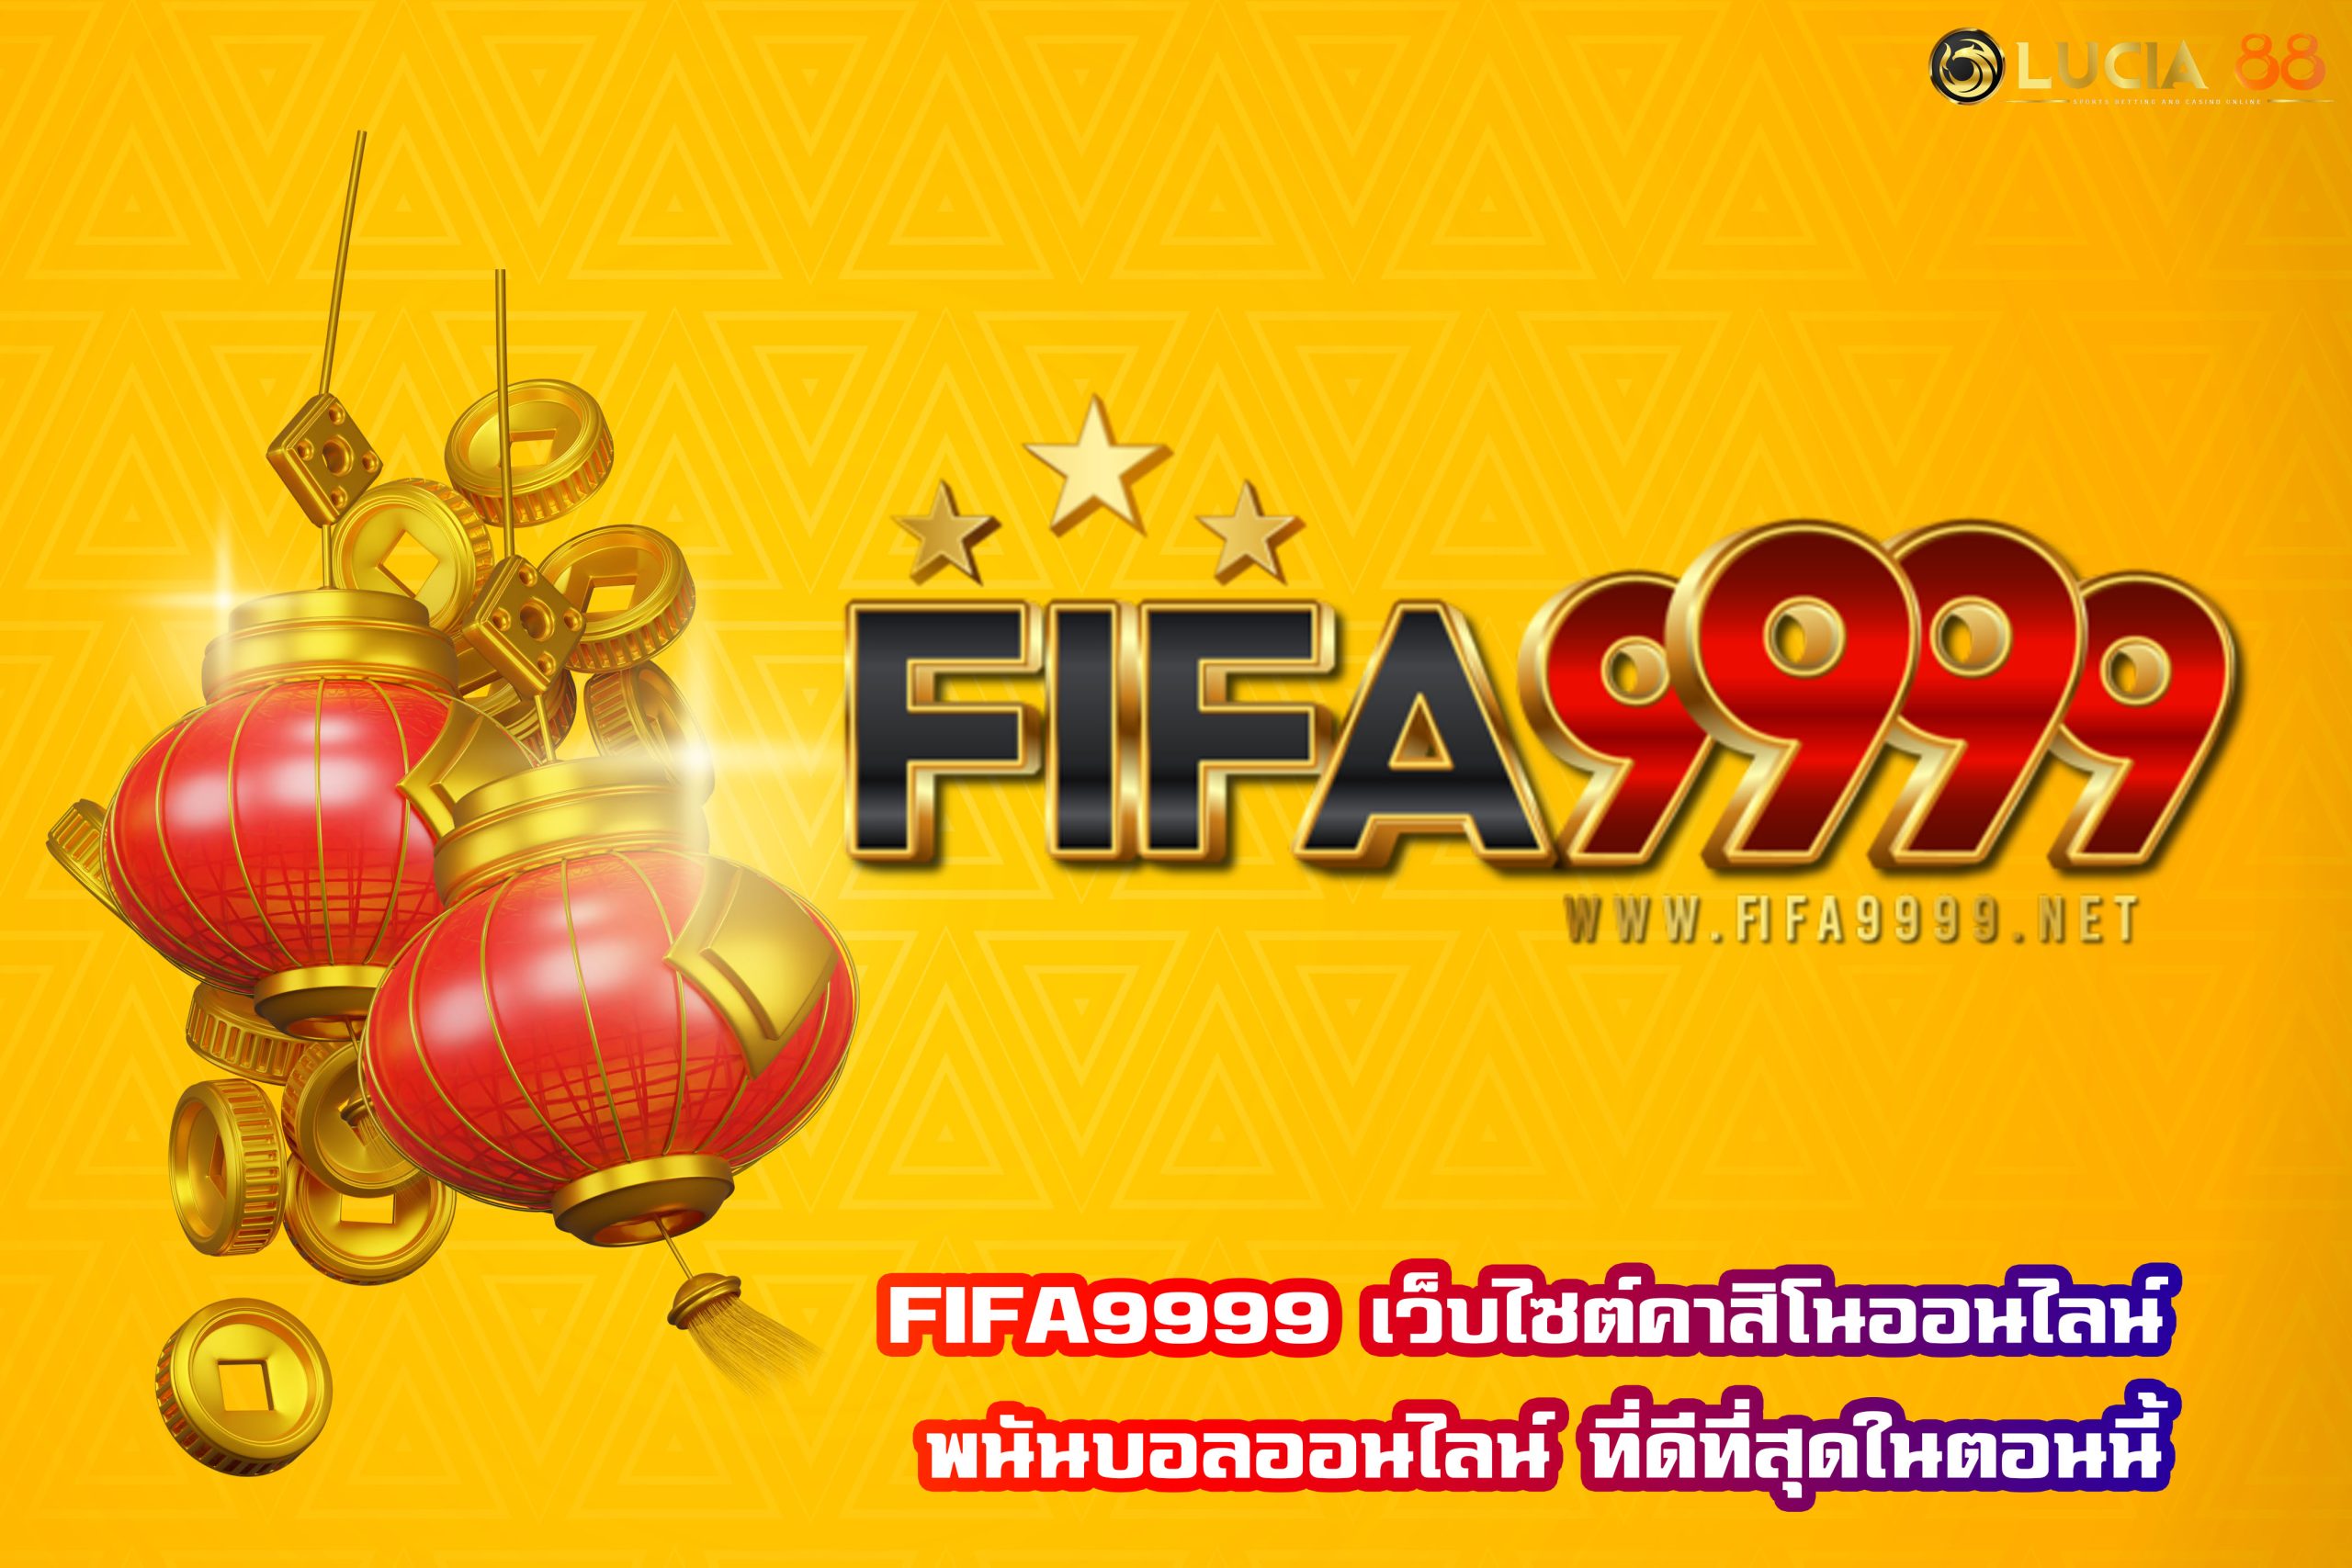 FIFA9999 เว็บไซต์คาสิโนออนไลน์ พนันบอลออนไลน์ ที่ดีที่สุดในตอนนี้